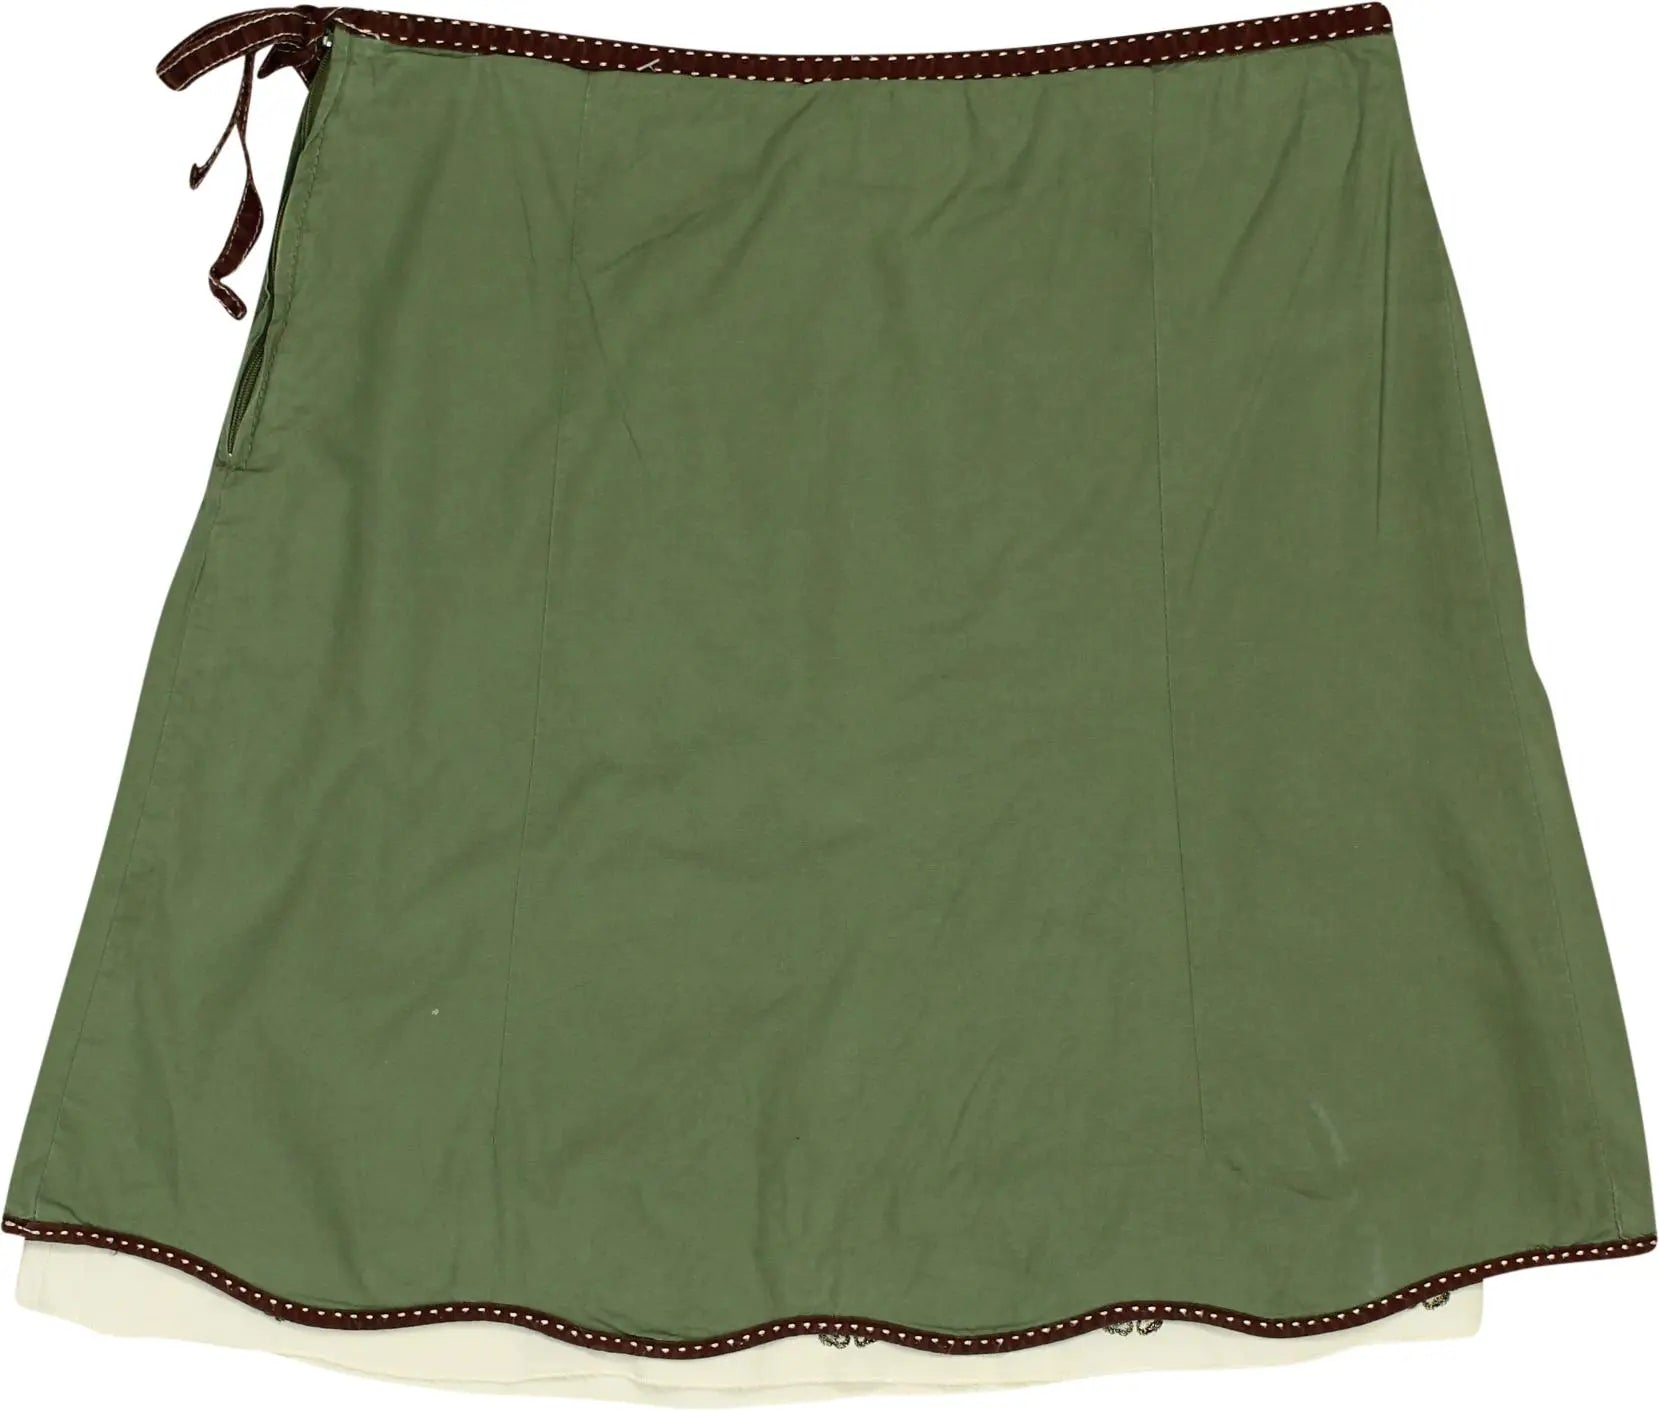 Tommy Hilfiger - Vintage A-line Skirt- ThriftTale.com - Vintage and second handclothing